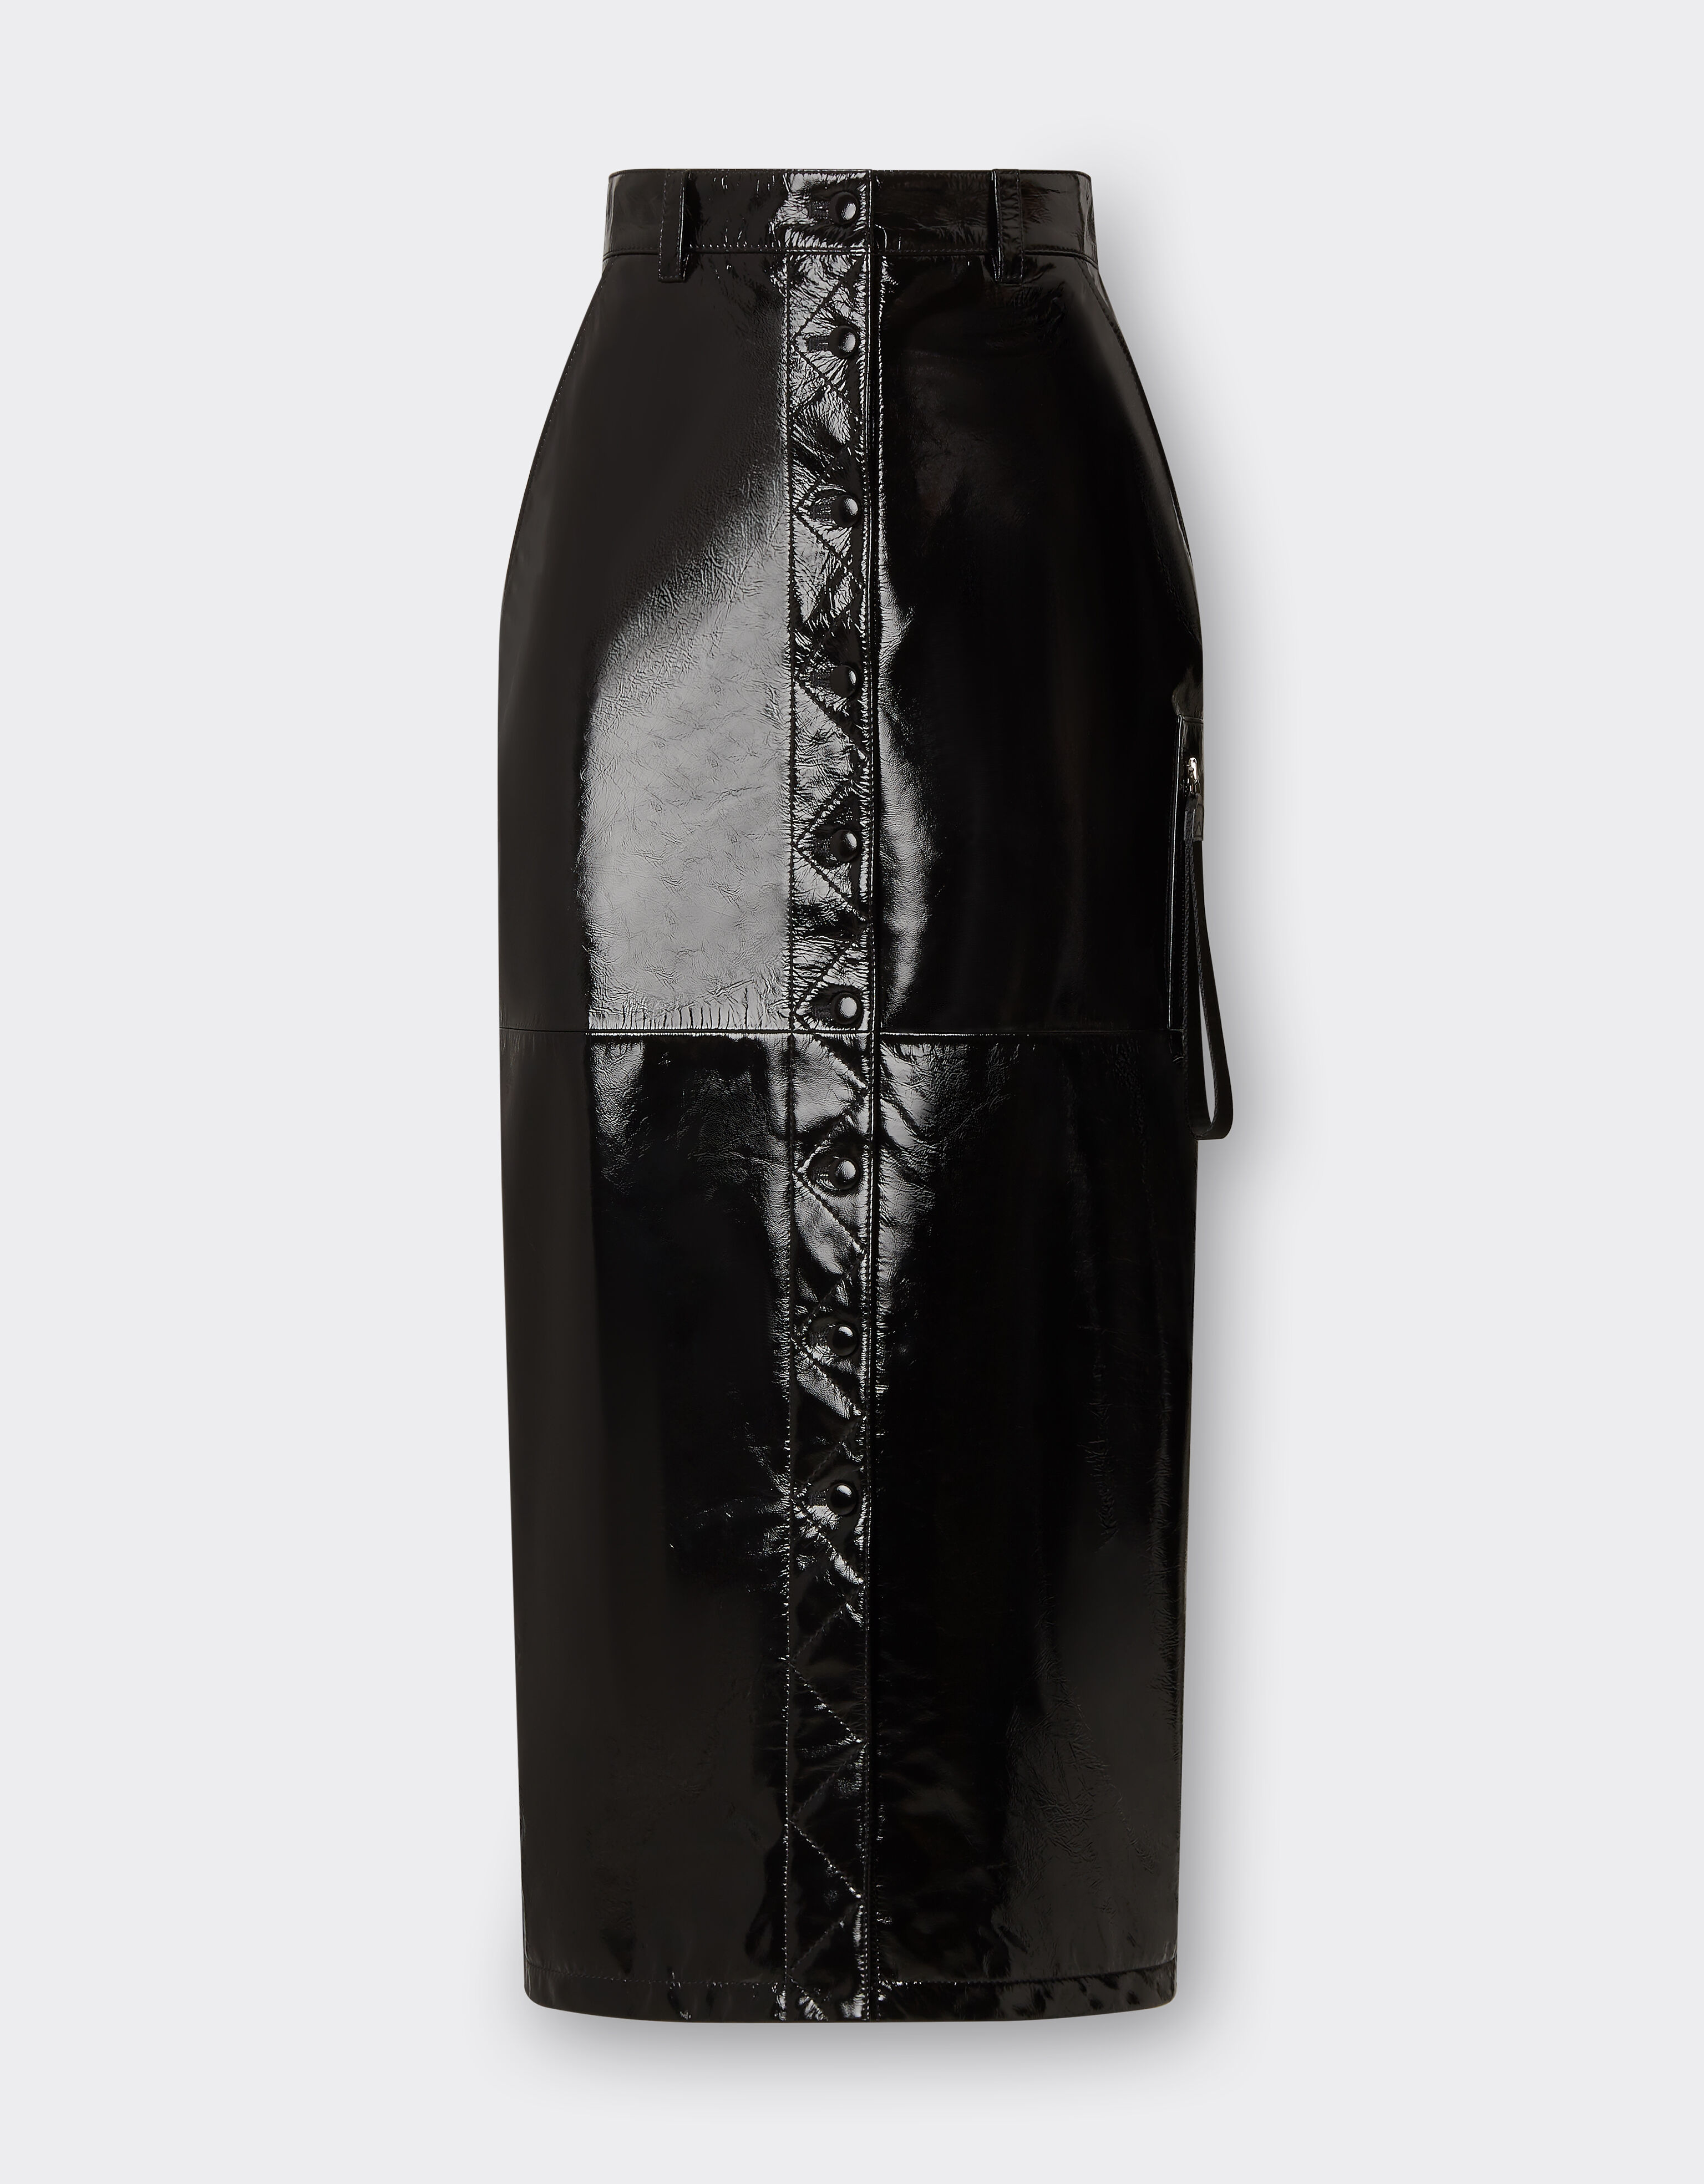 Ferrari 覆层皮革迷笛半裙 黑色 48335f